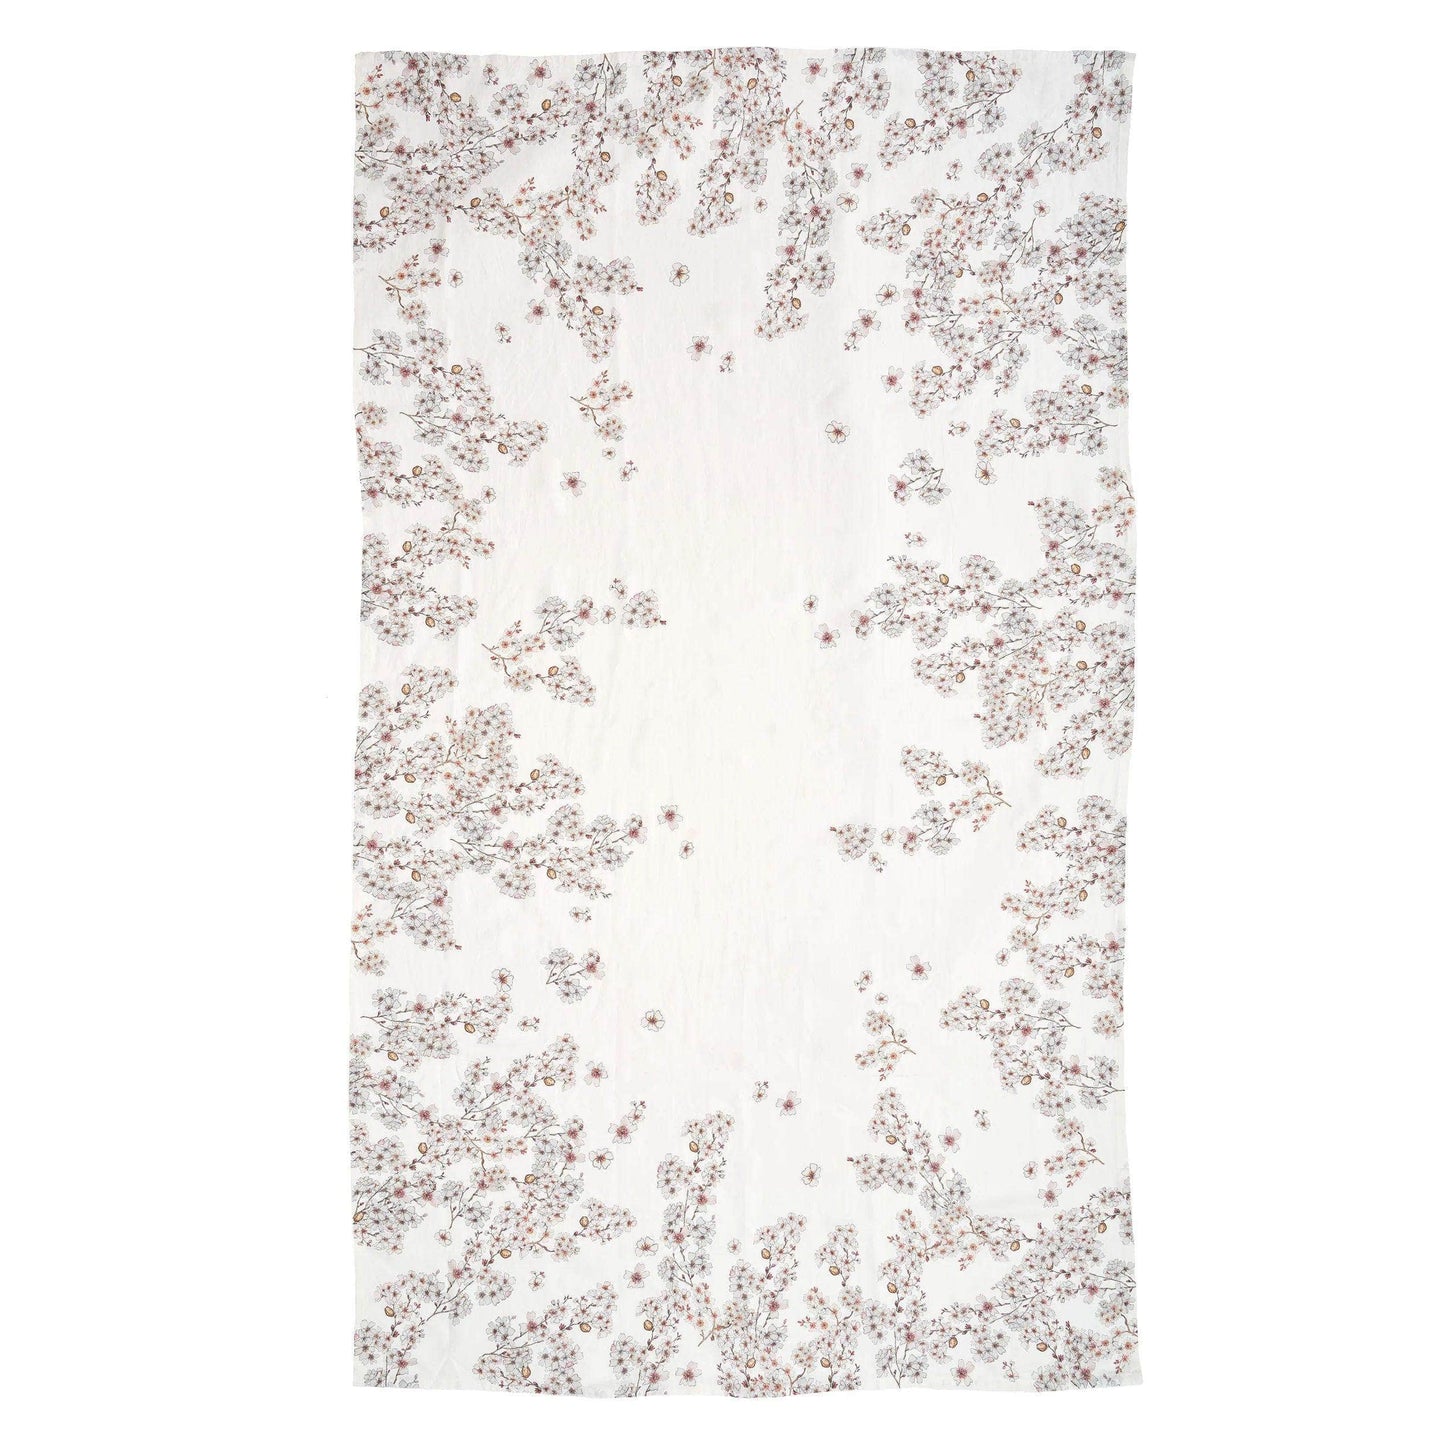 Almond Blossom Border Linen Table Cloth